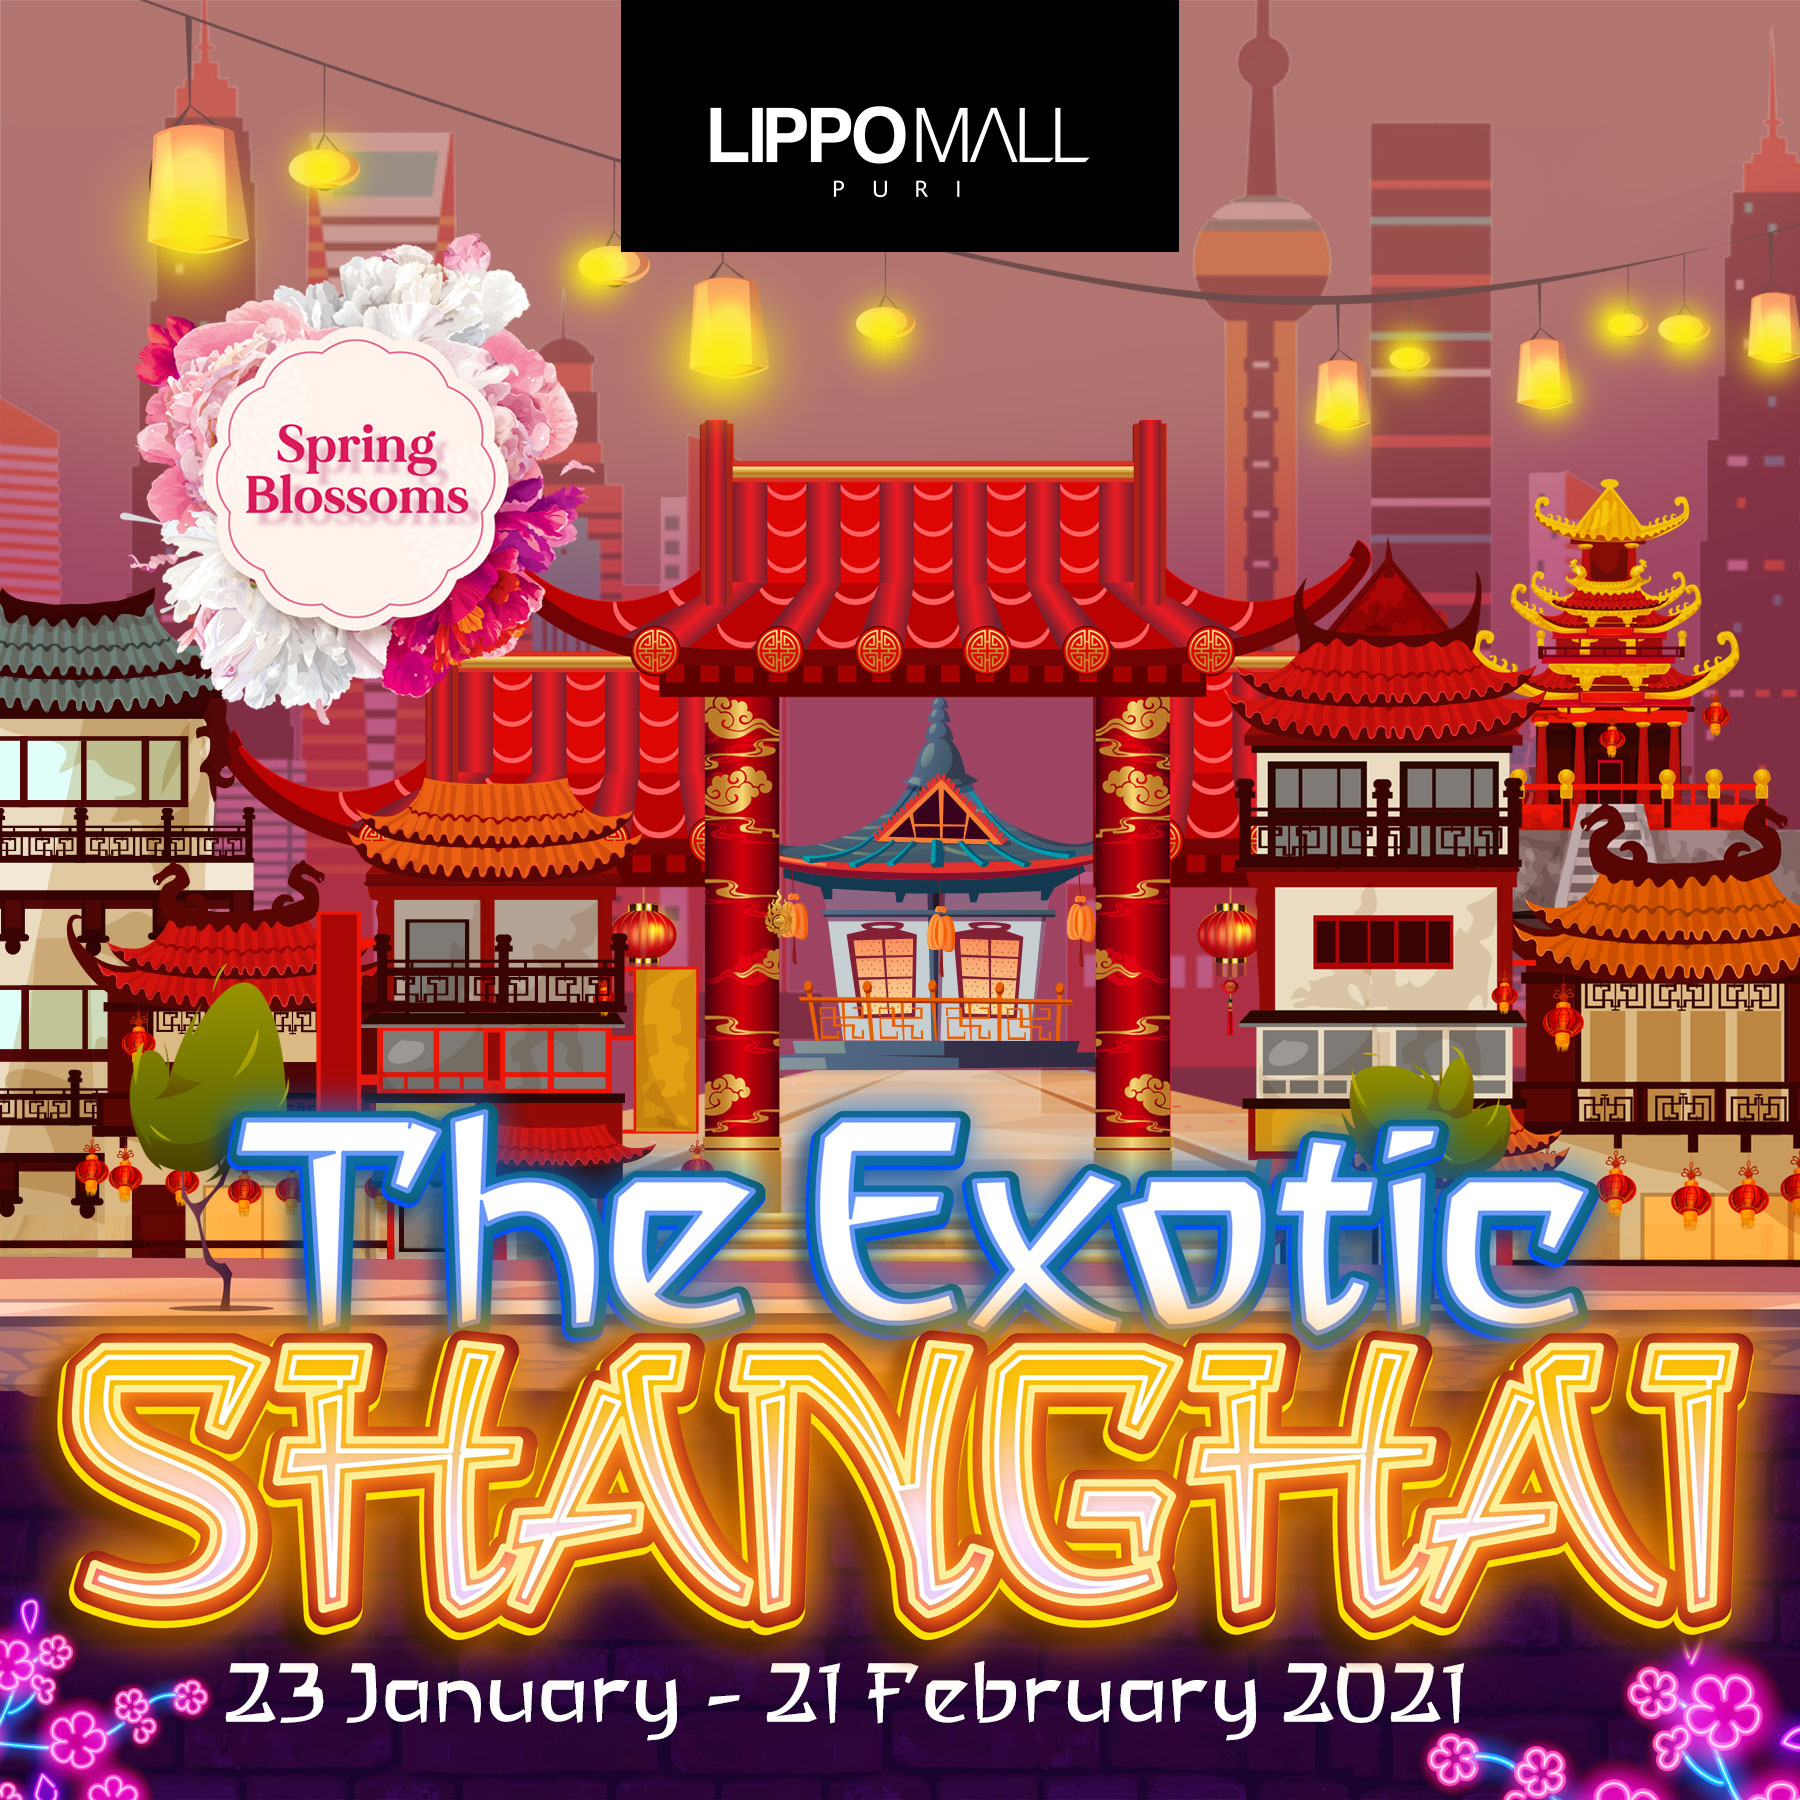 The Exotic Shanghai Promo in lippo mall puri st. moritz